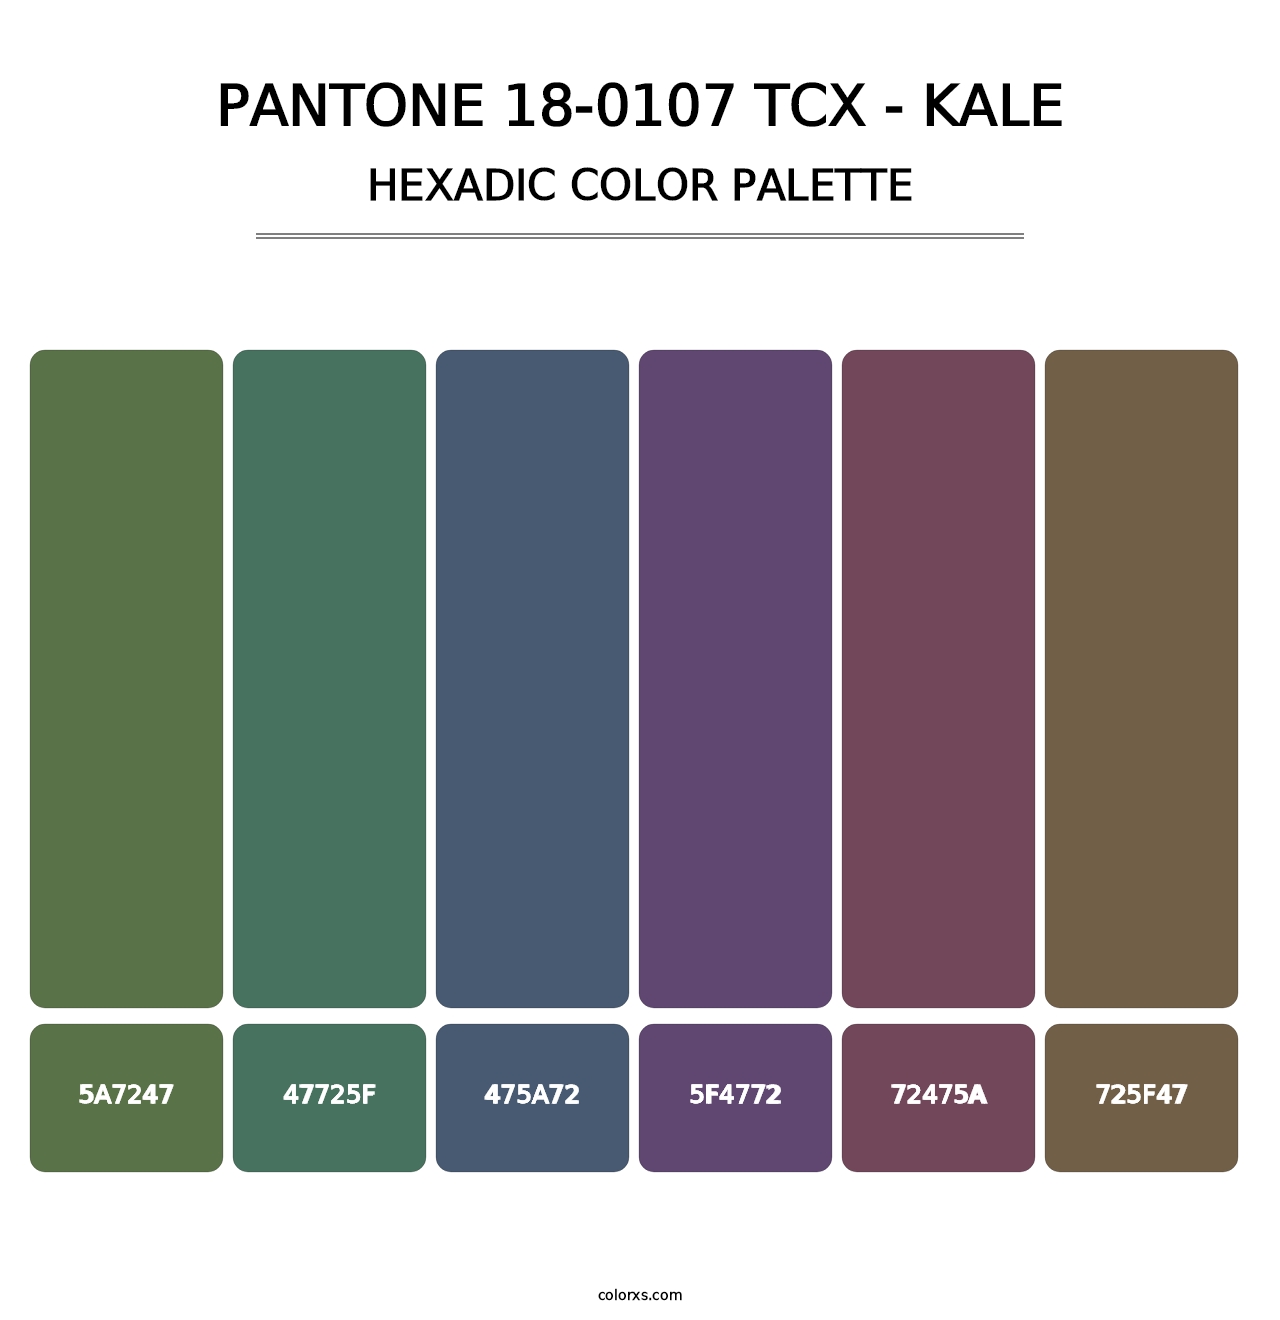 PANTONE 18-0107 TCX - Kale - Hexadic Color Palette